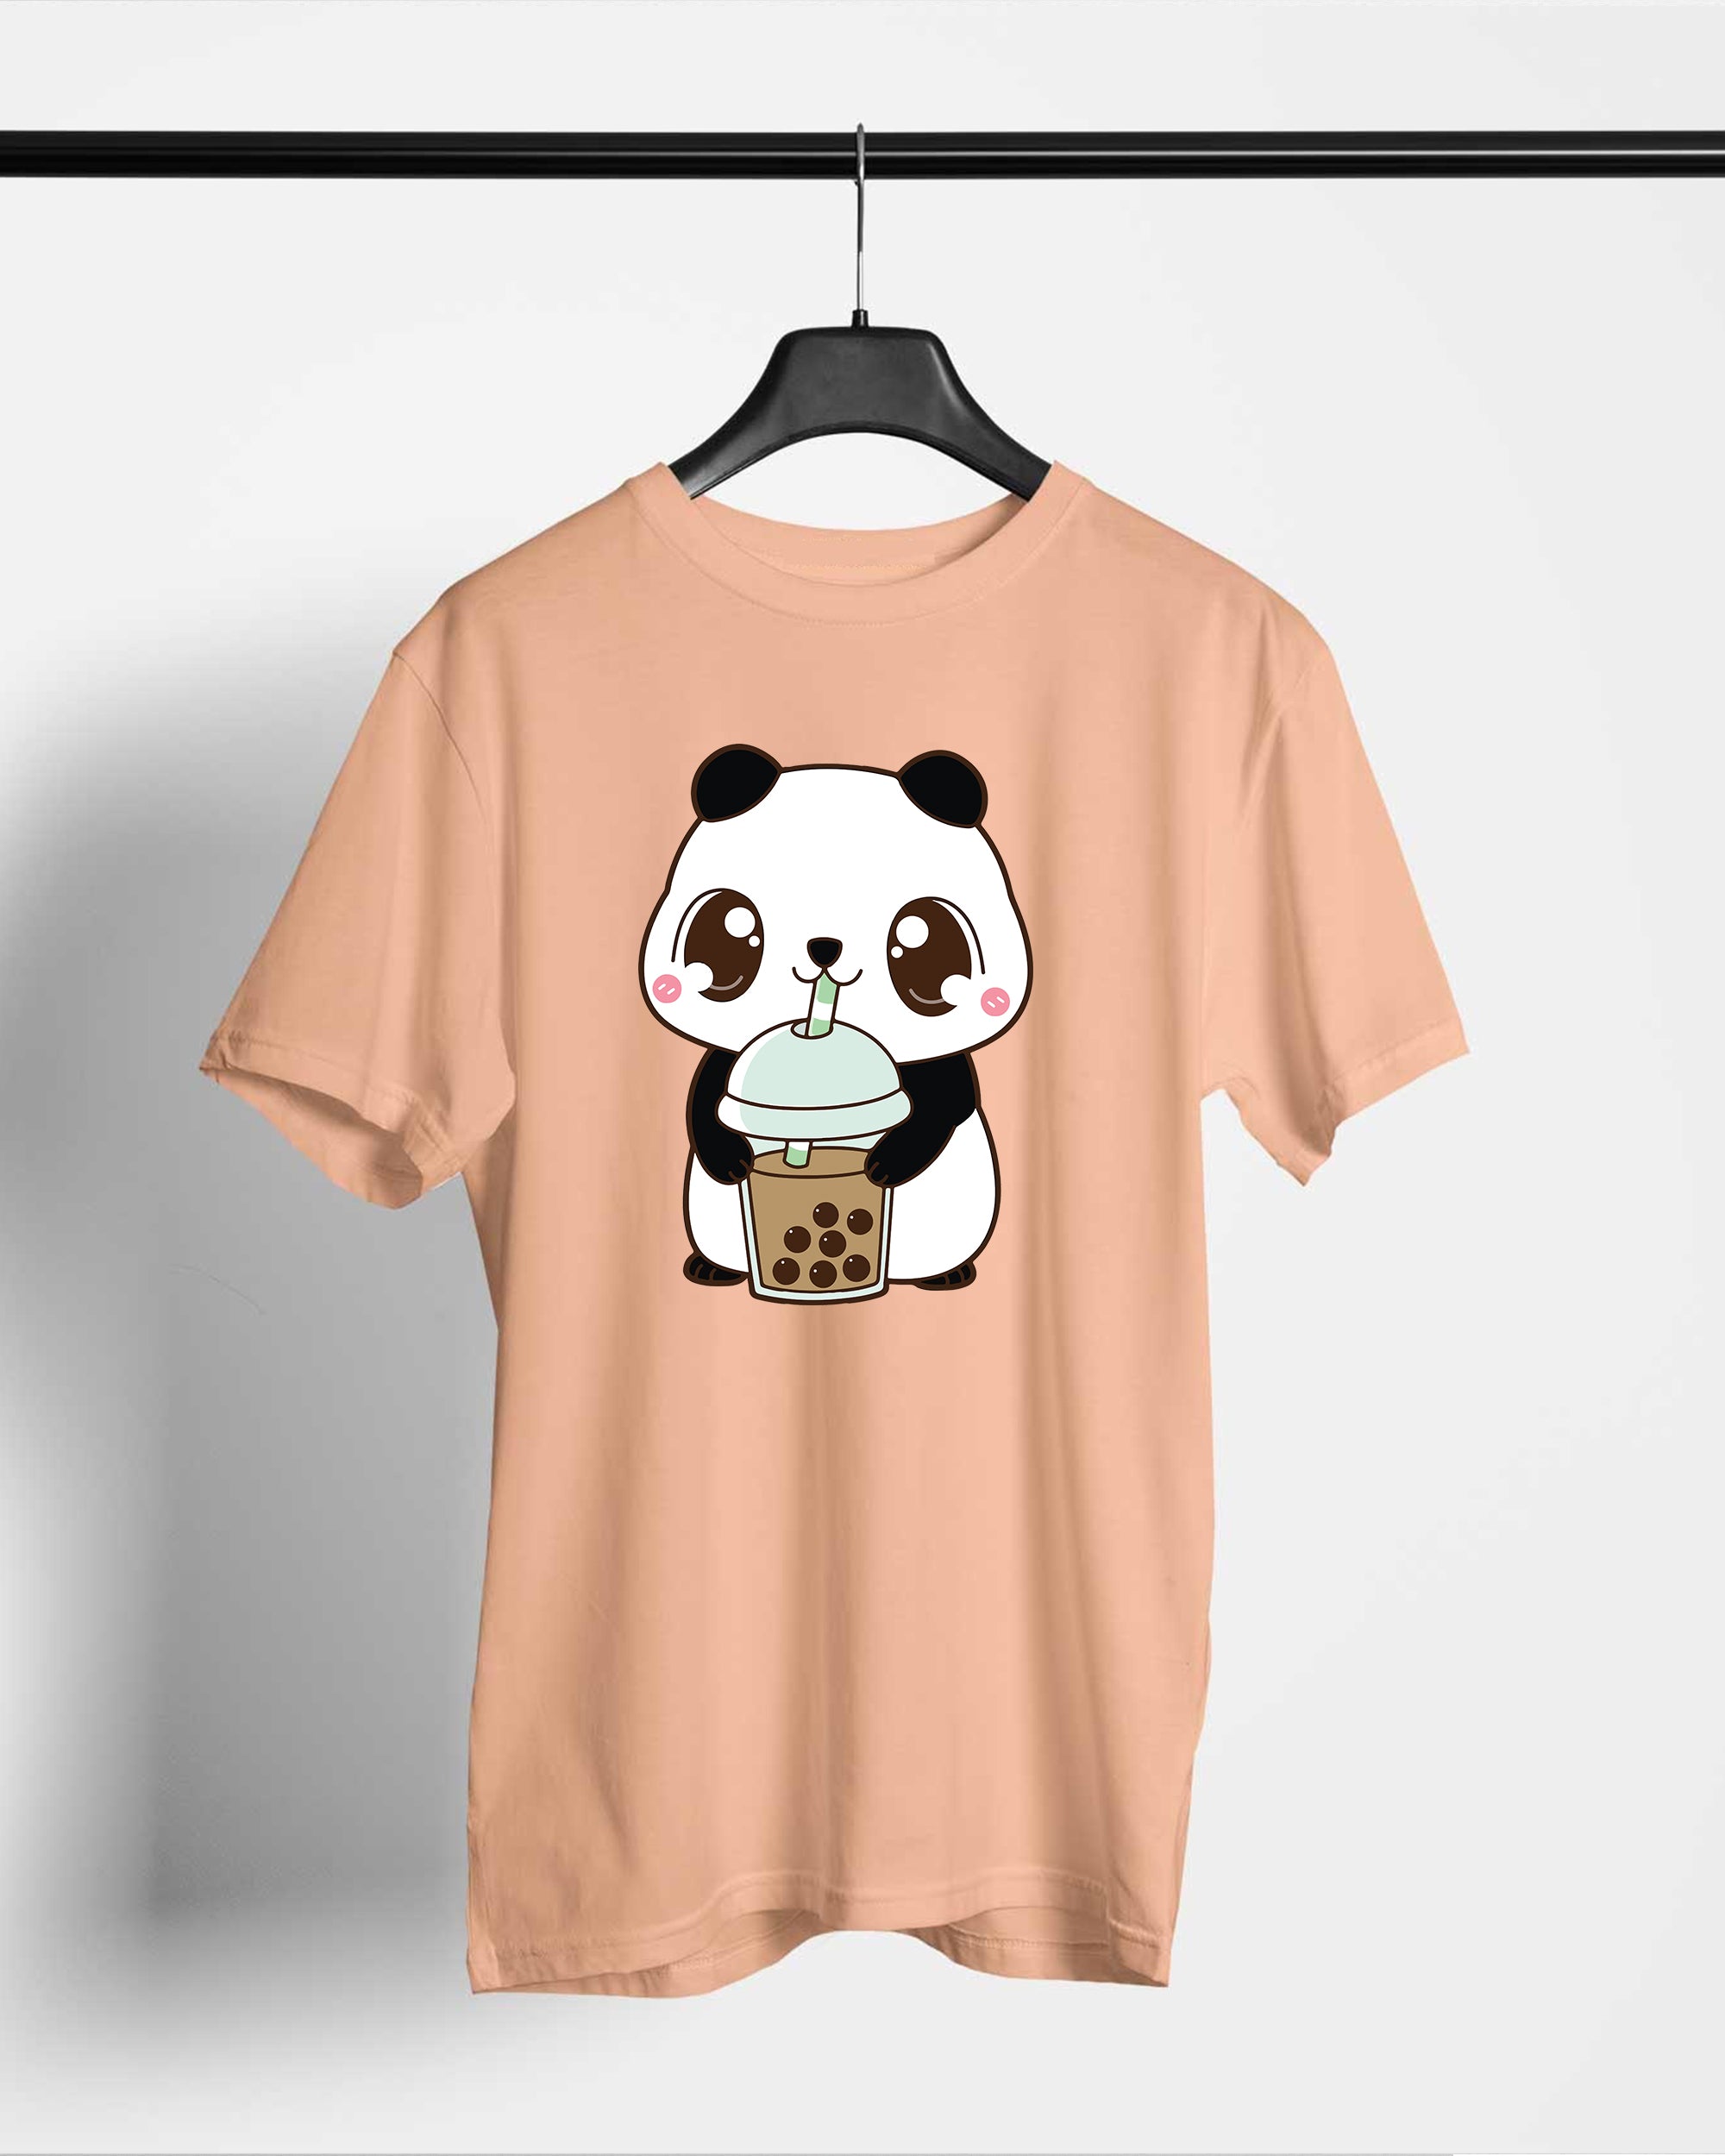 Panda T-Shirts For Men || Peach || Stylish Tshirts || 100% Cotton || Best T-Shirt For Men's